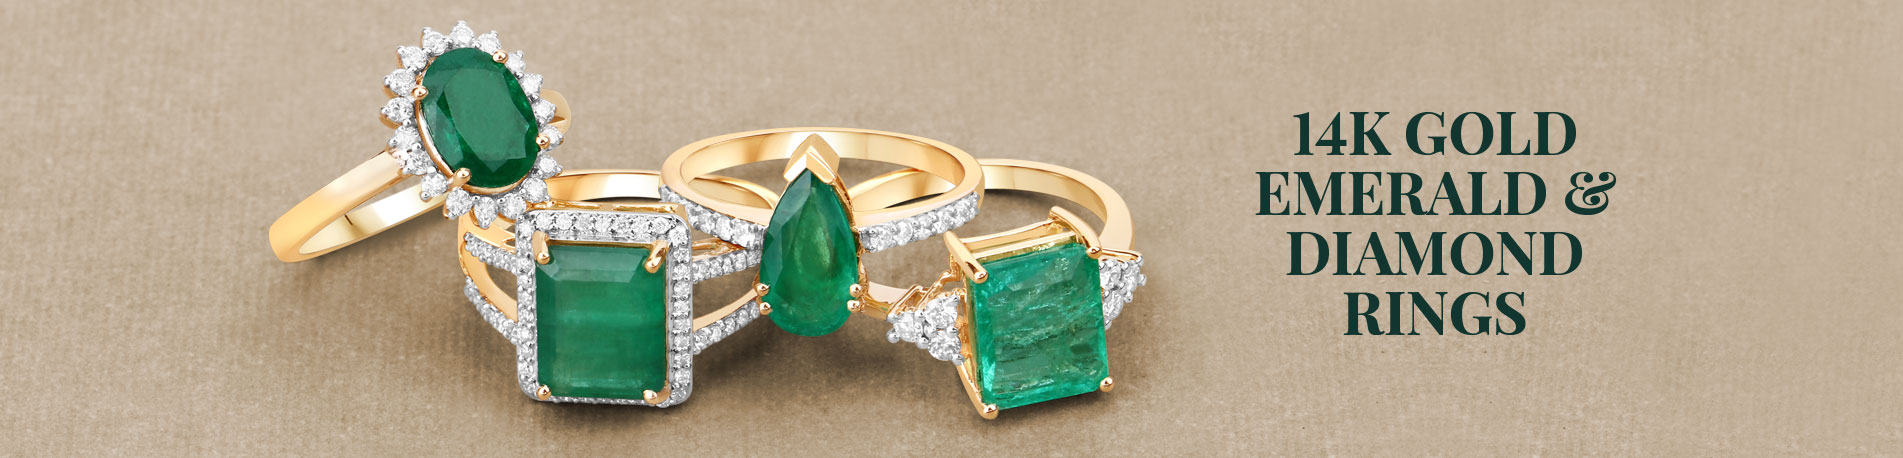 14k Gold Emerald & Diamond Rings